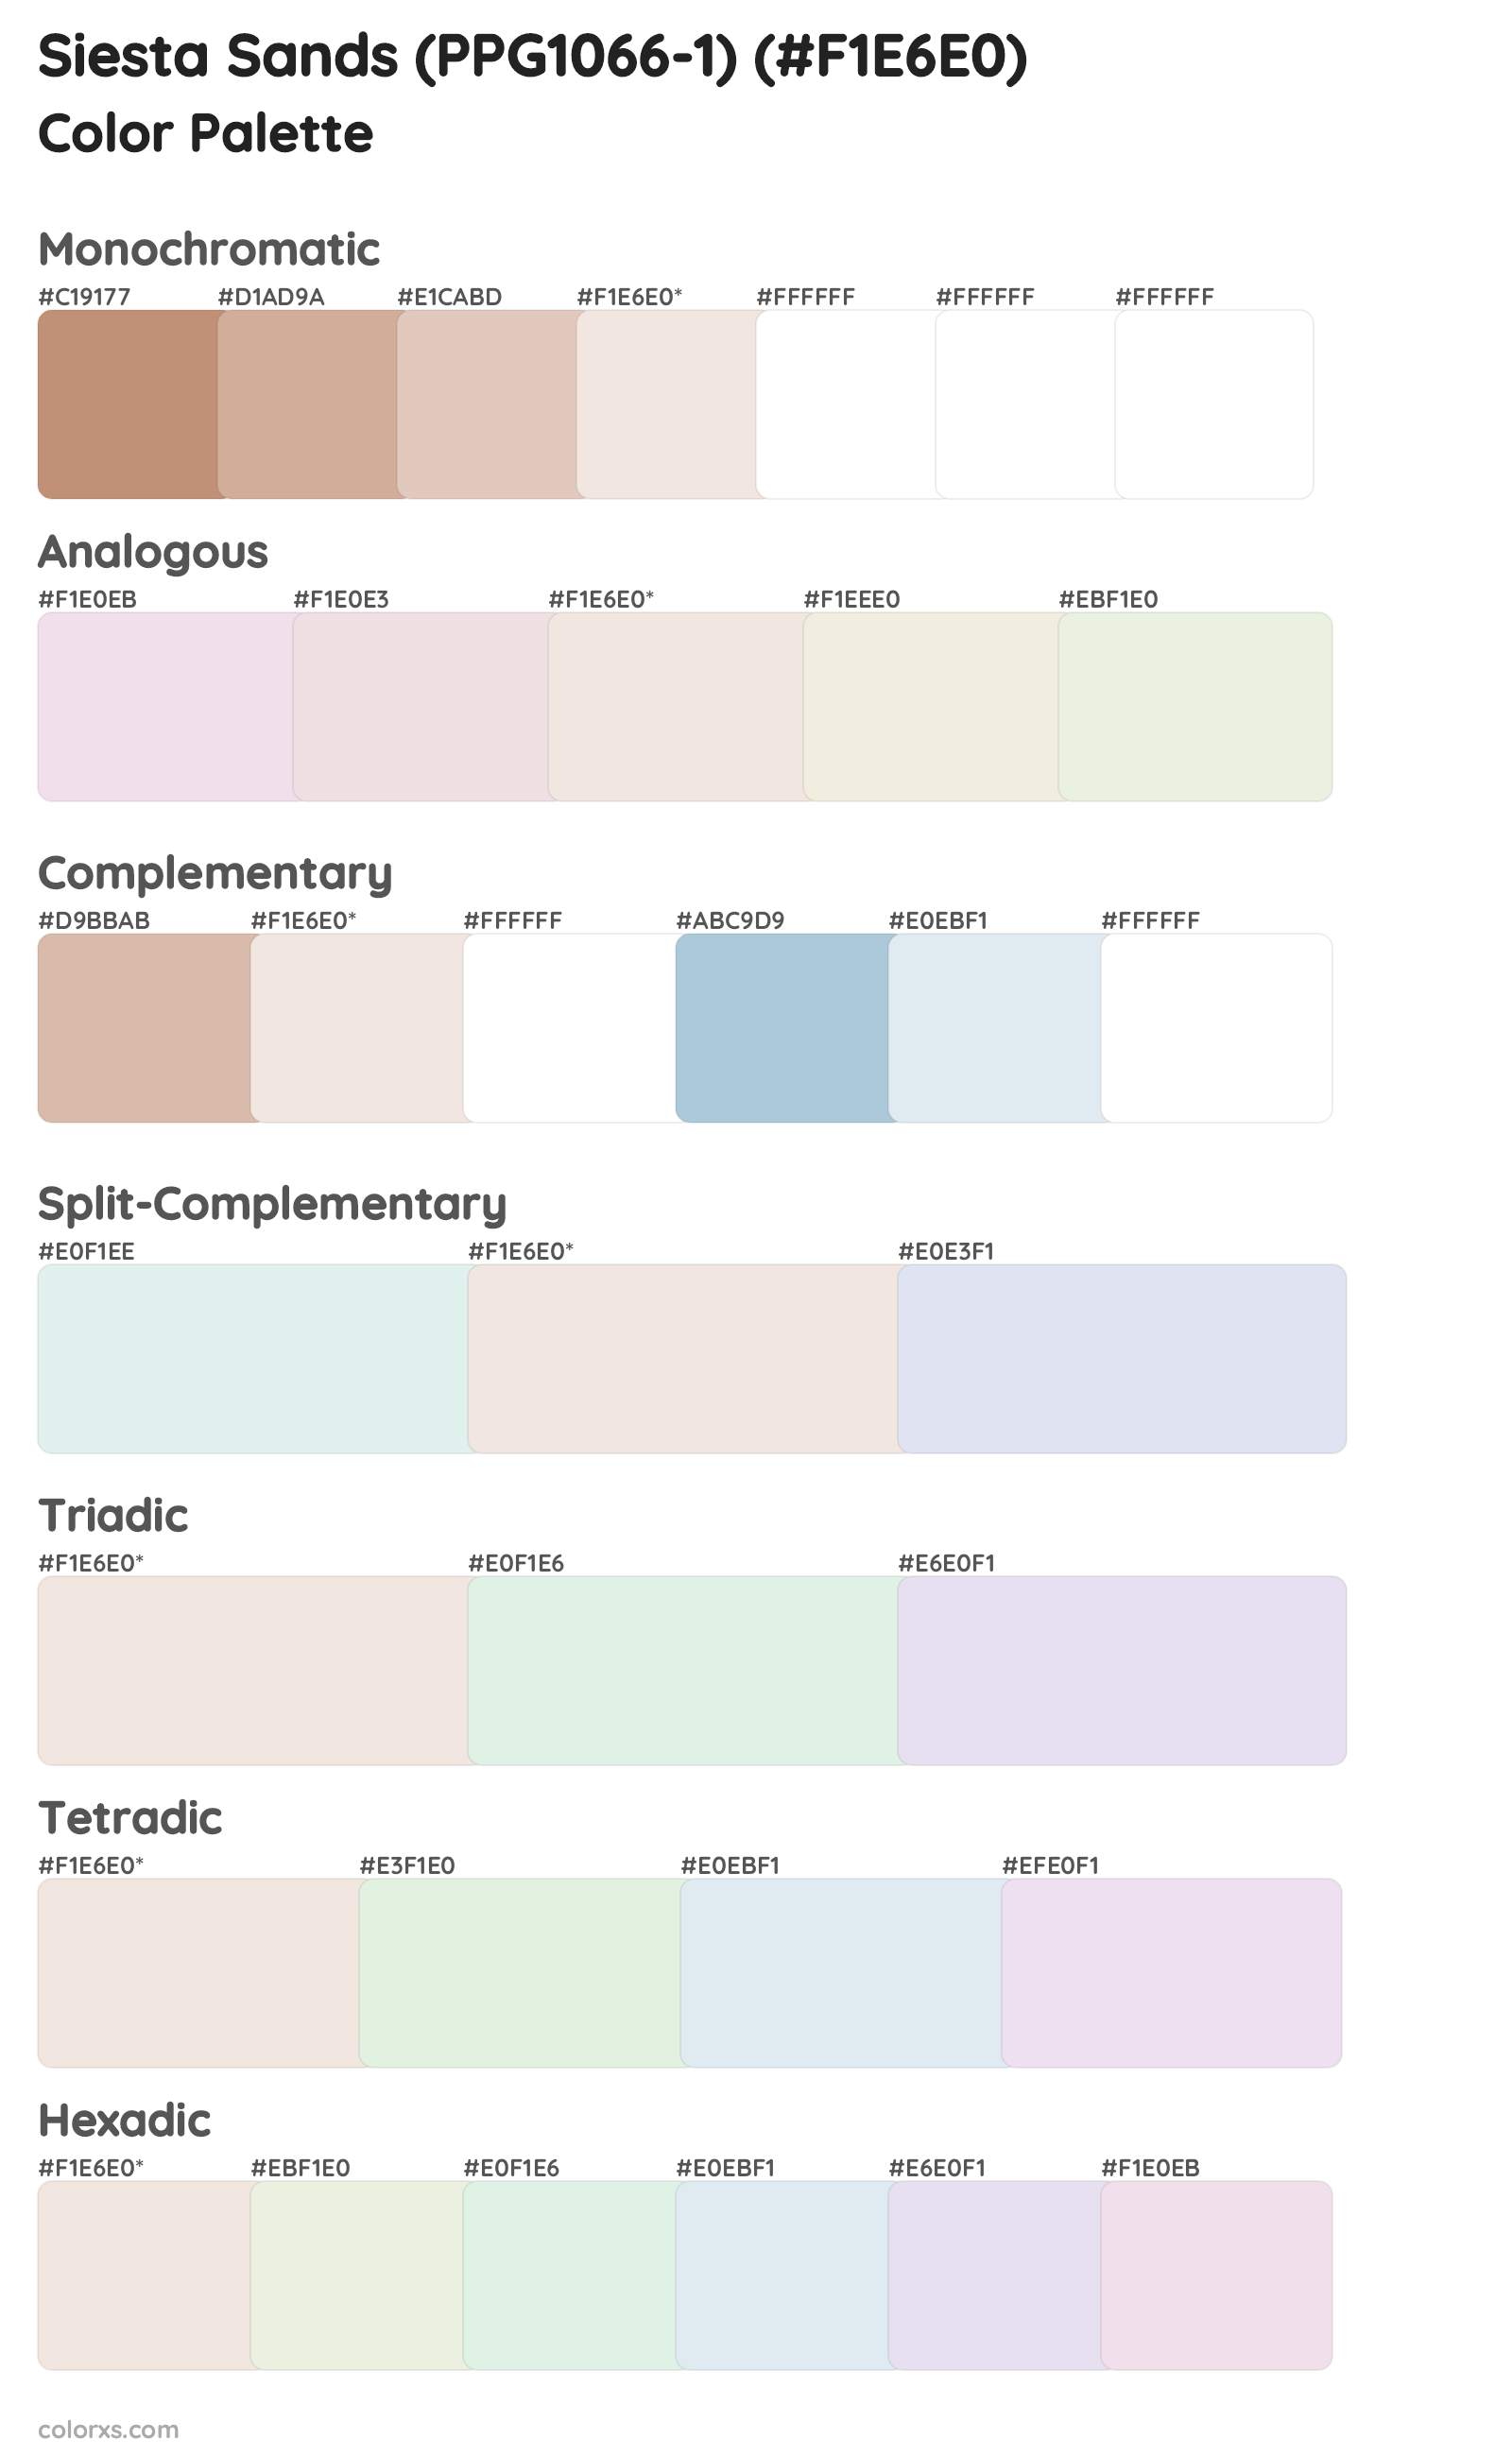 Siesta Sands (PPG1066-1) Color Scheme Palettes